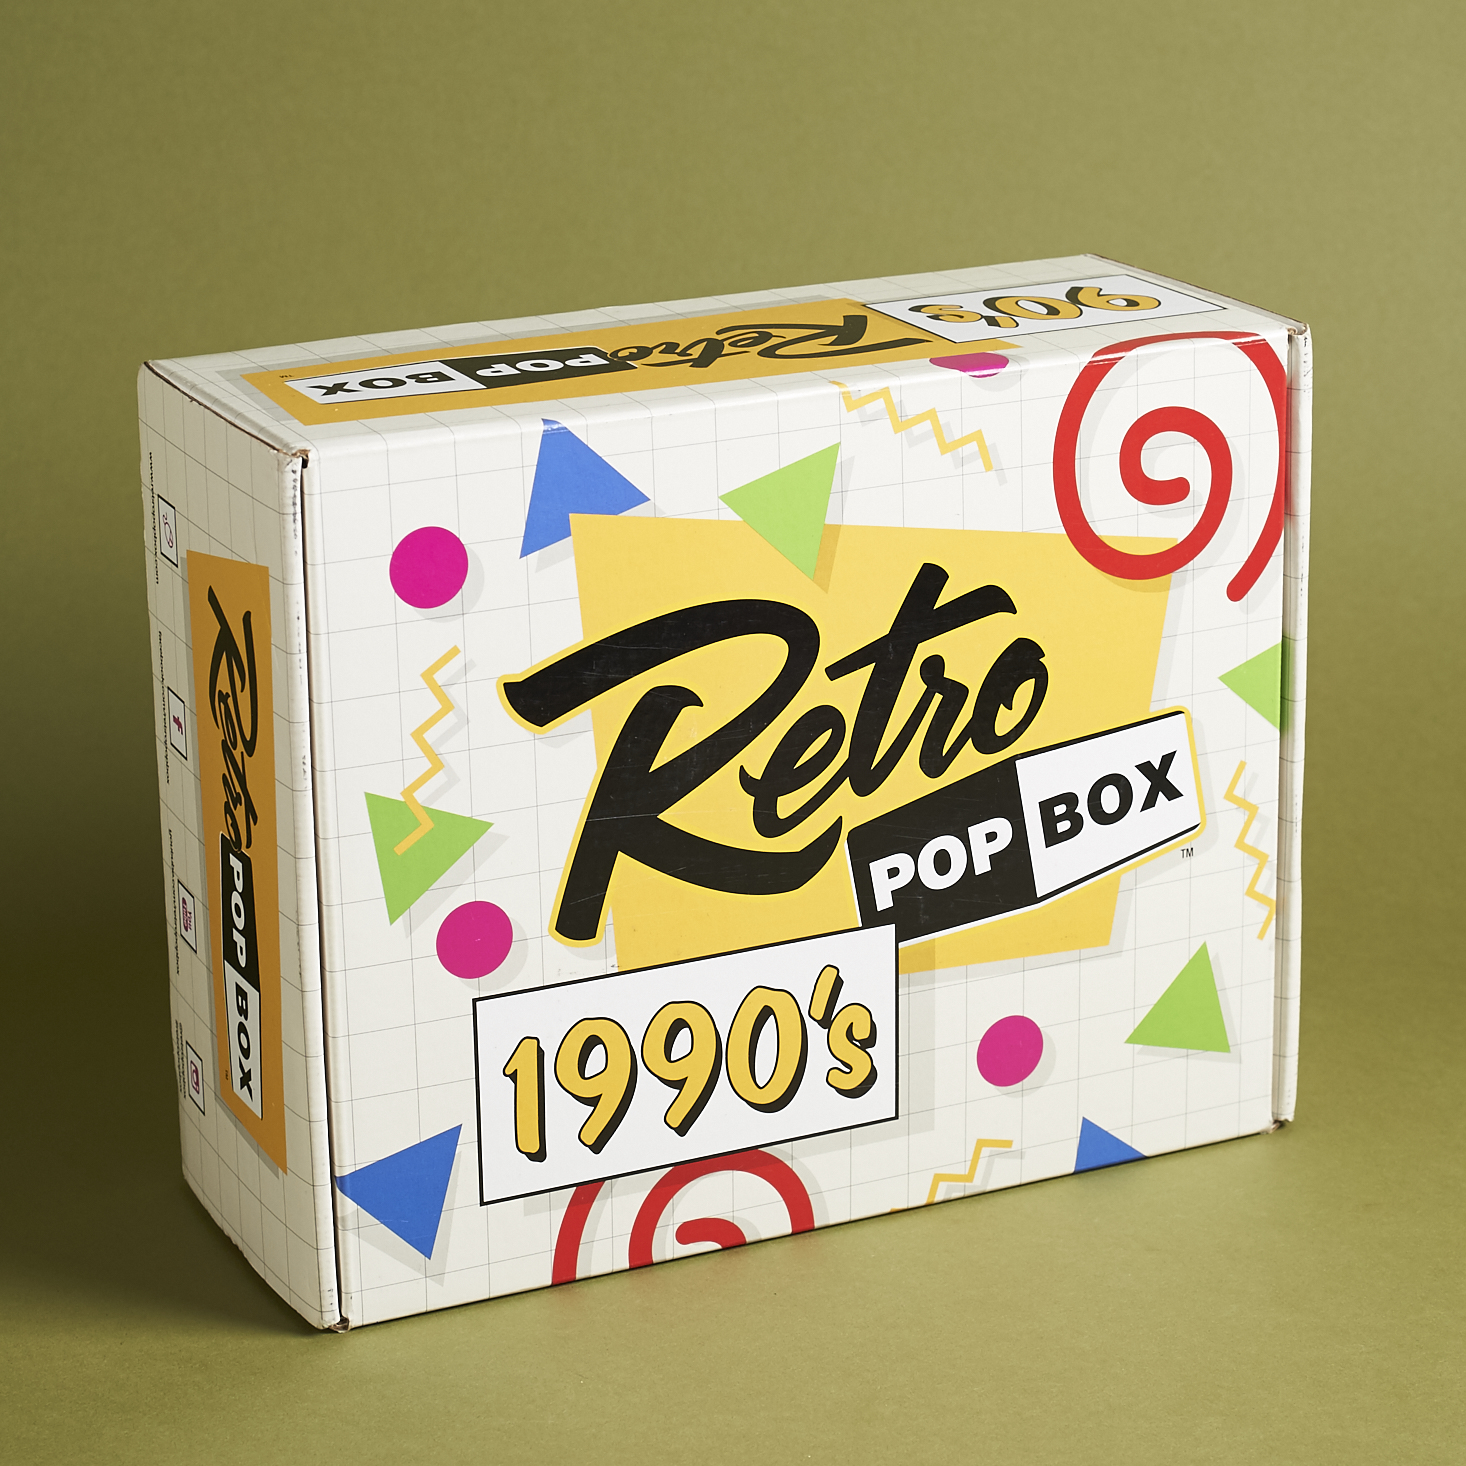 90s Retro Pop Box Subscription Review + Coupon- December 2016